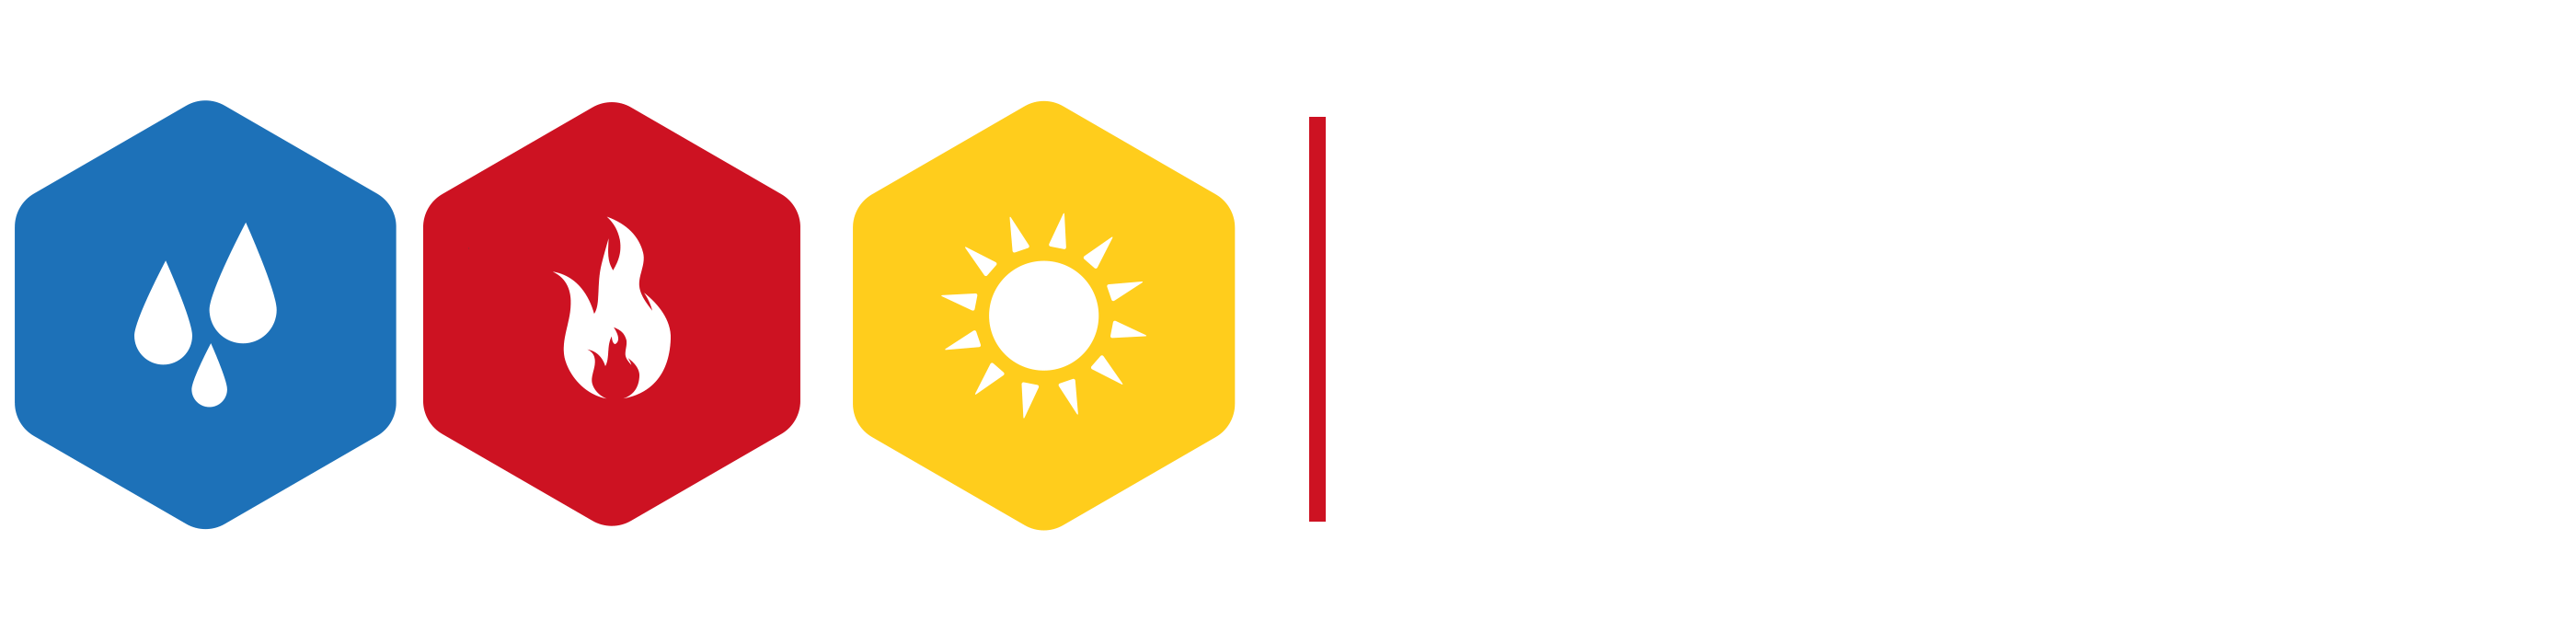 MKZ-Envia-Bau Kft.